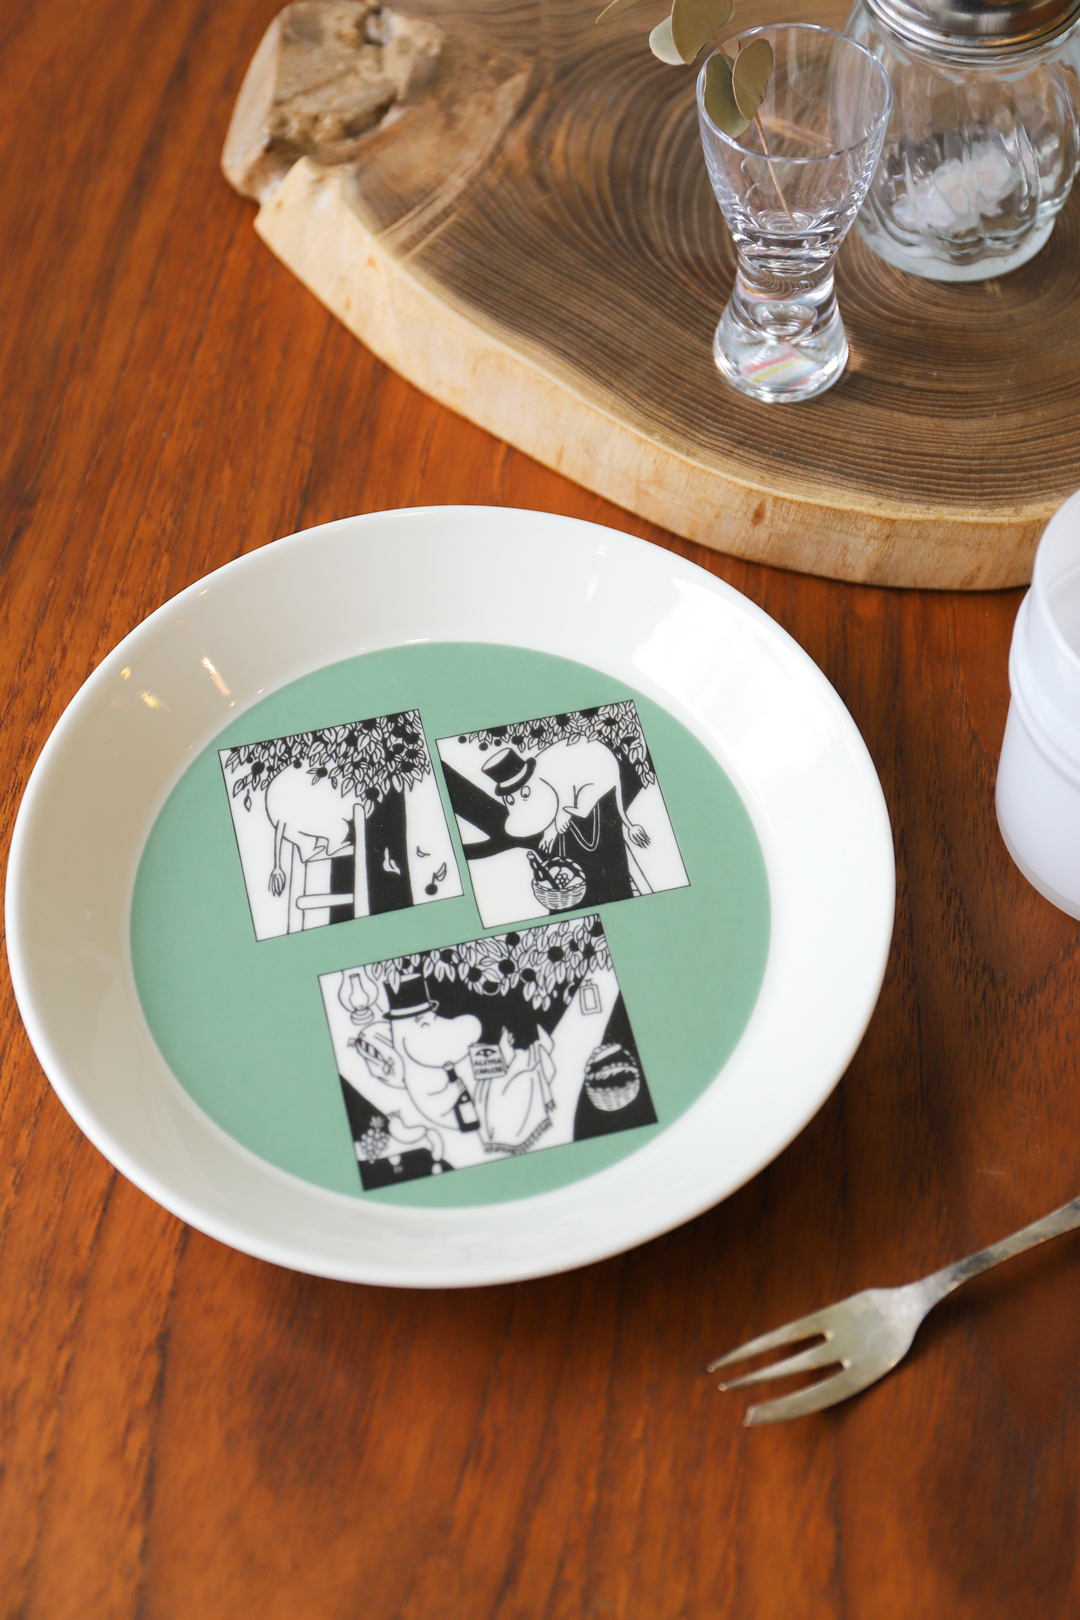 ARABIA Moomin Collection Plate Set 2015/アラビア ムーミン コレクションプレートセット 2015年 廃盤 フィンランド 北欧食器